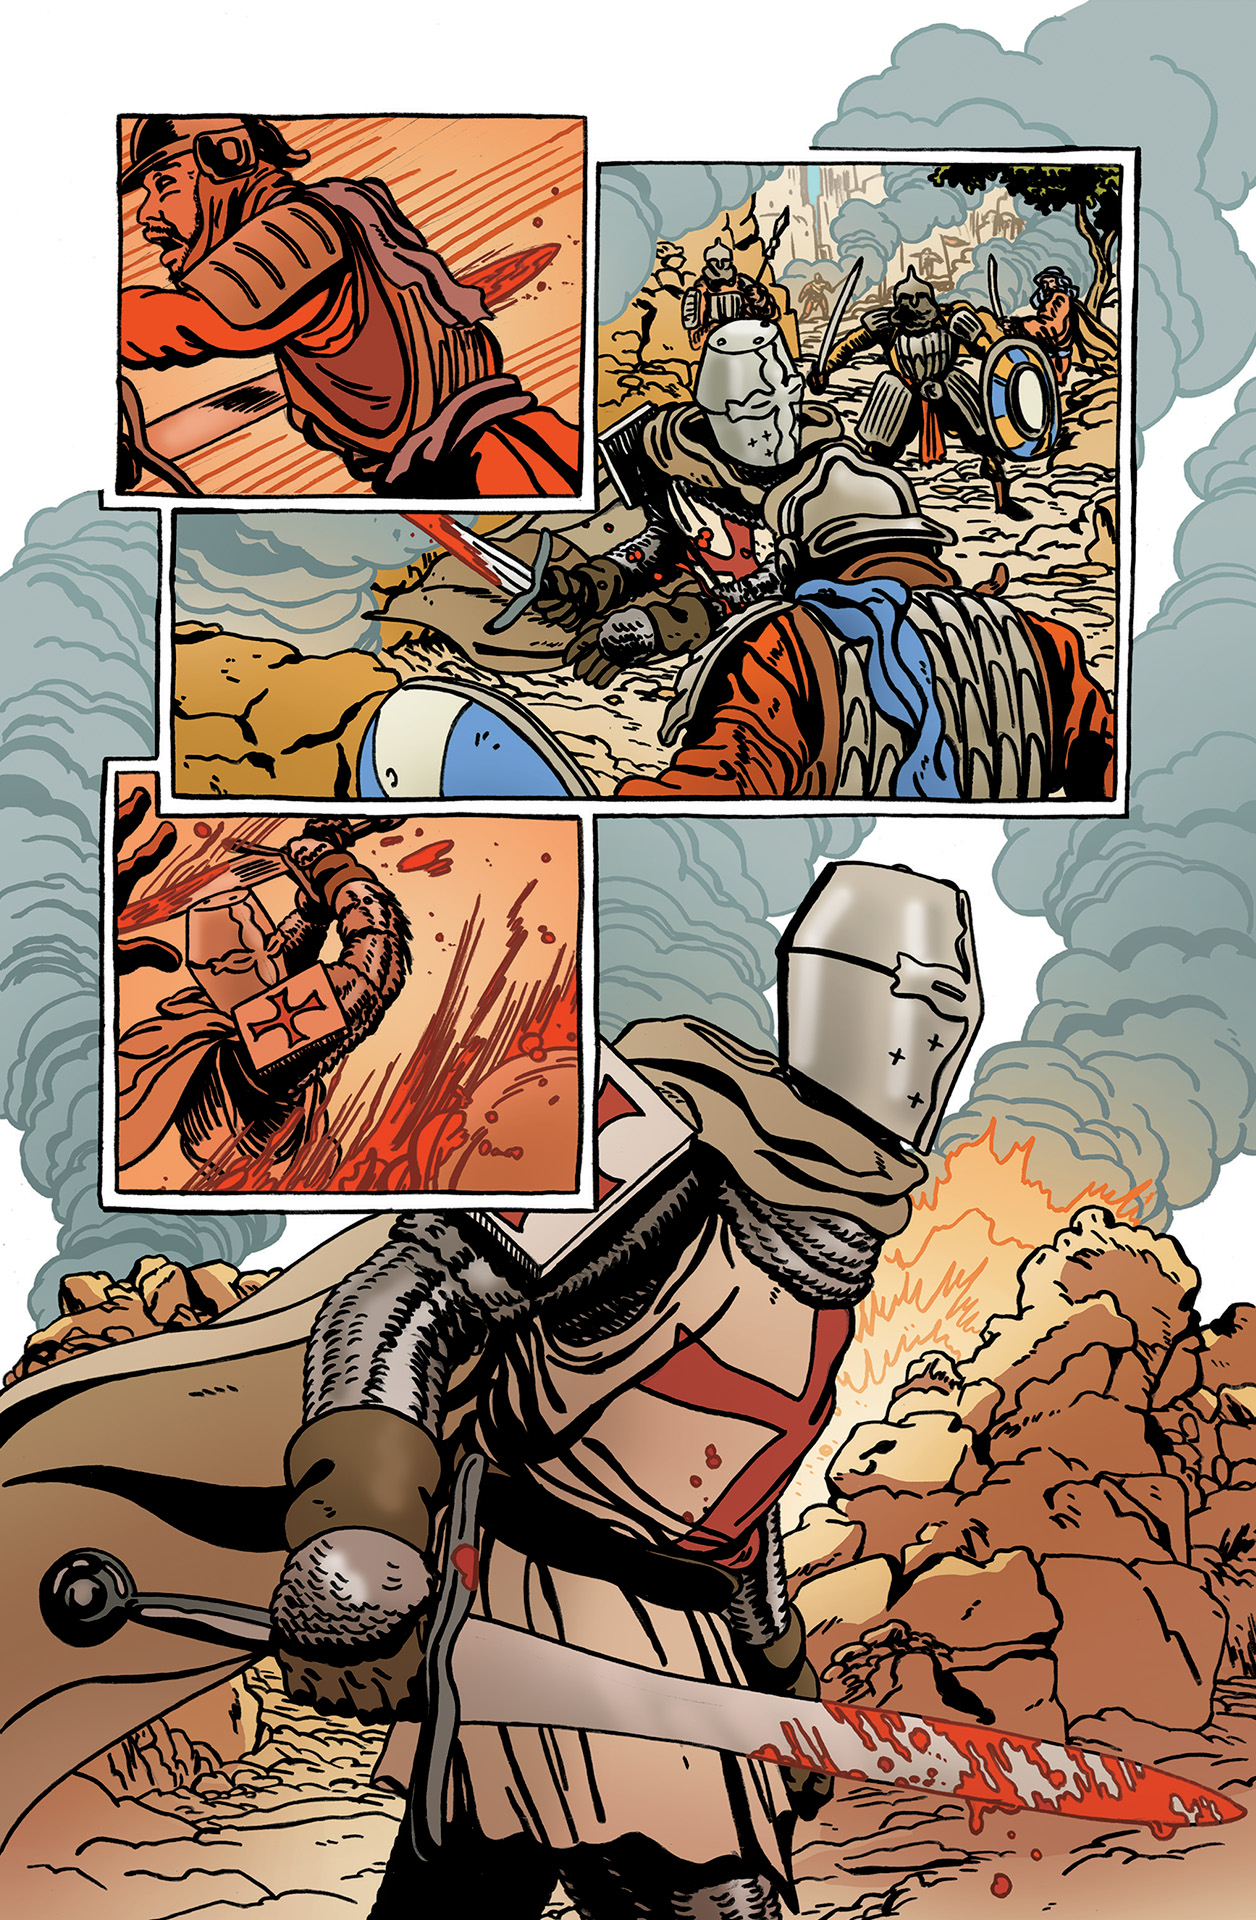 The crusader comics